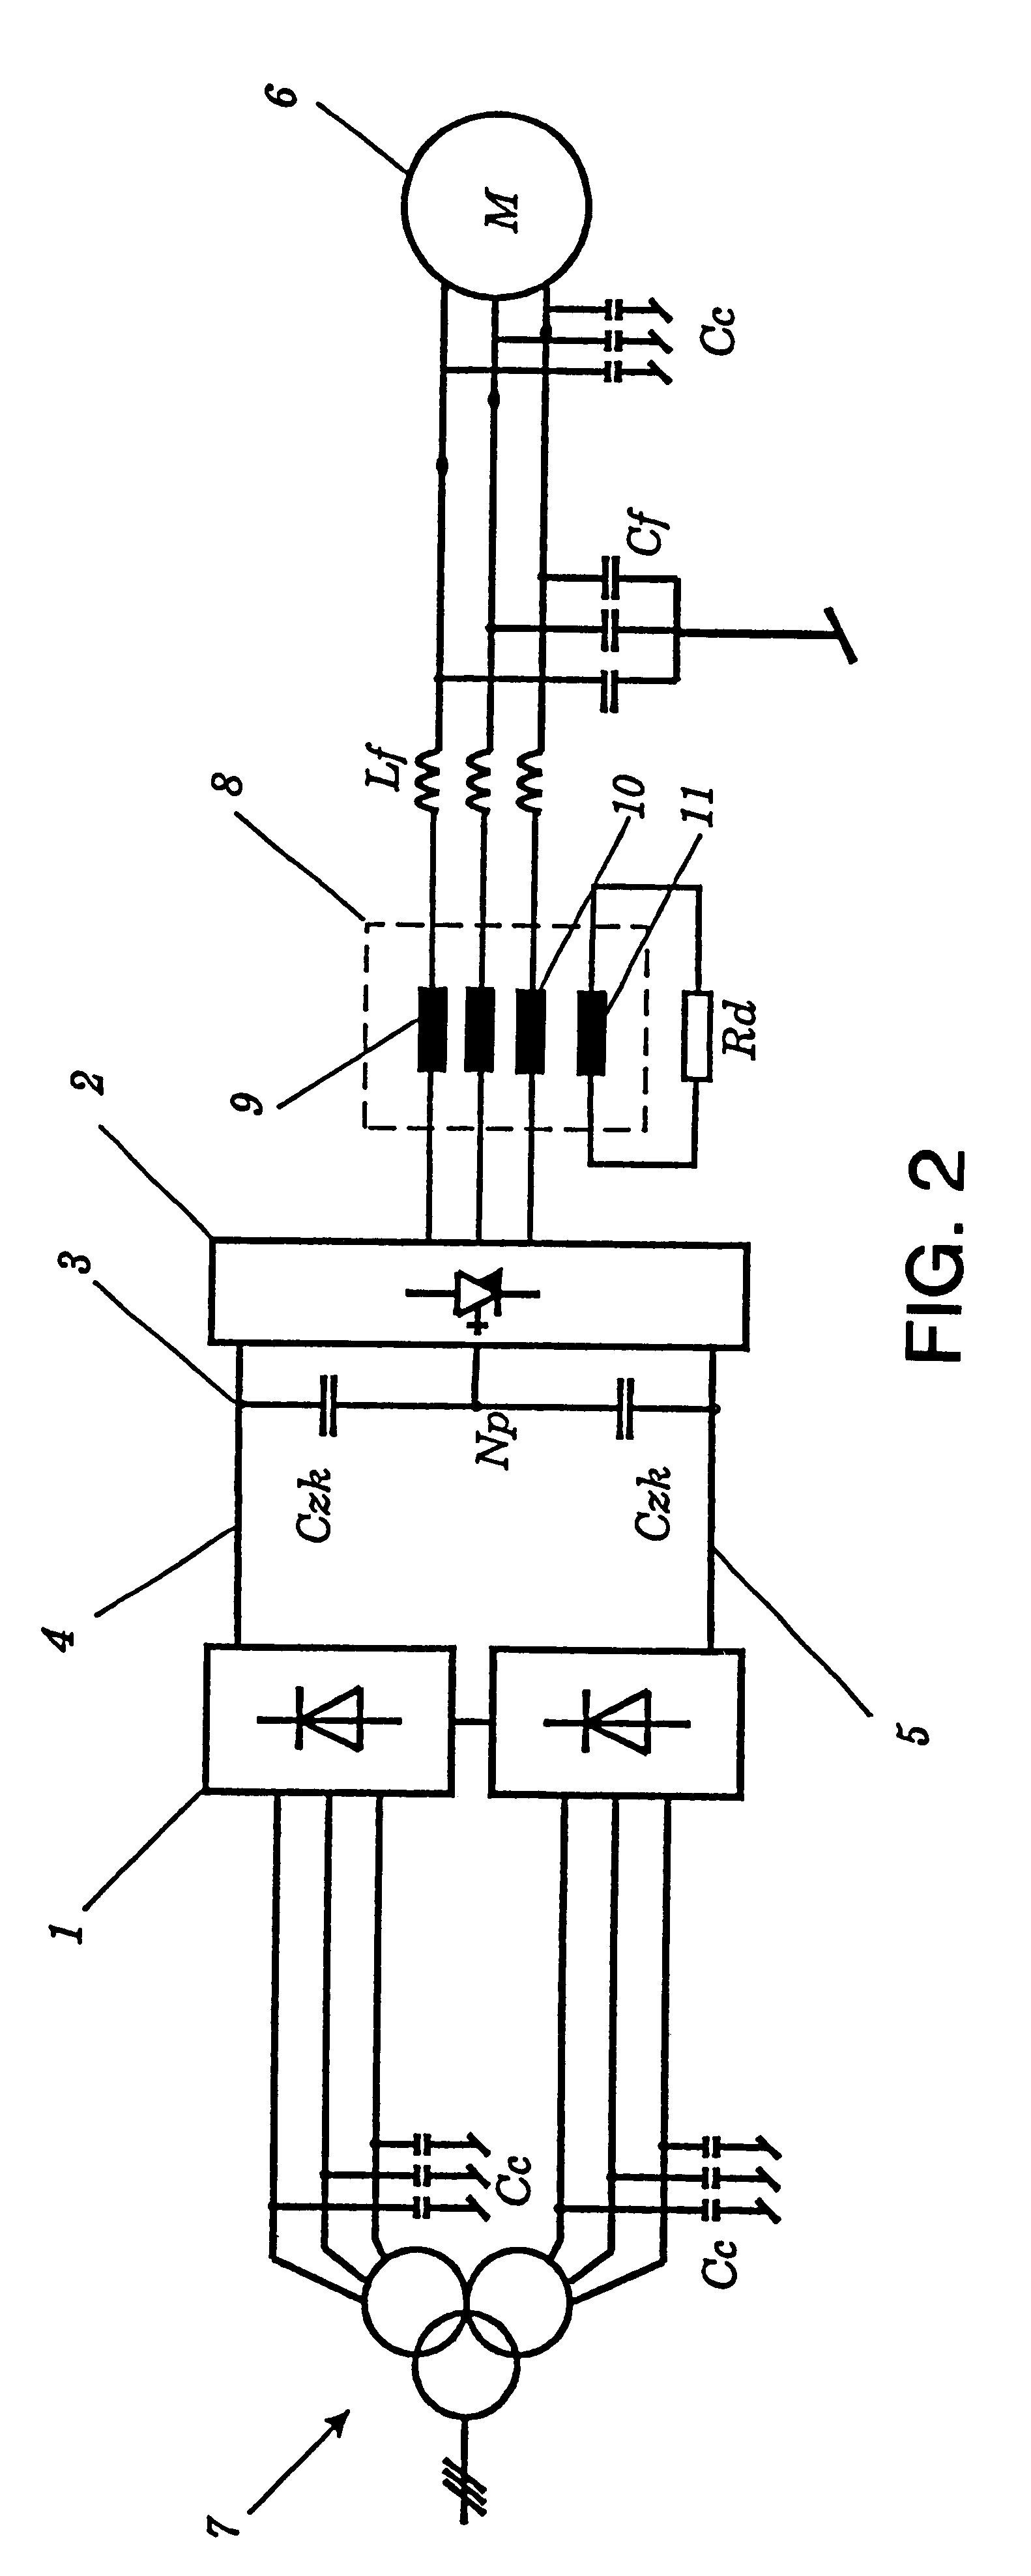 Converter circuit arrangement having a DC intermediate circuit